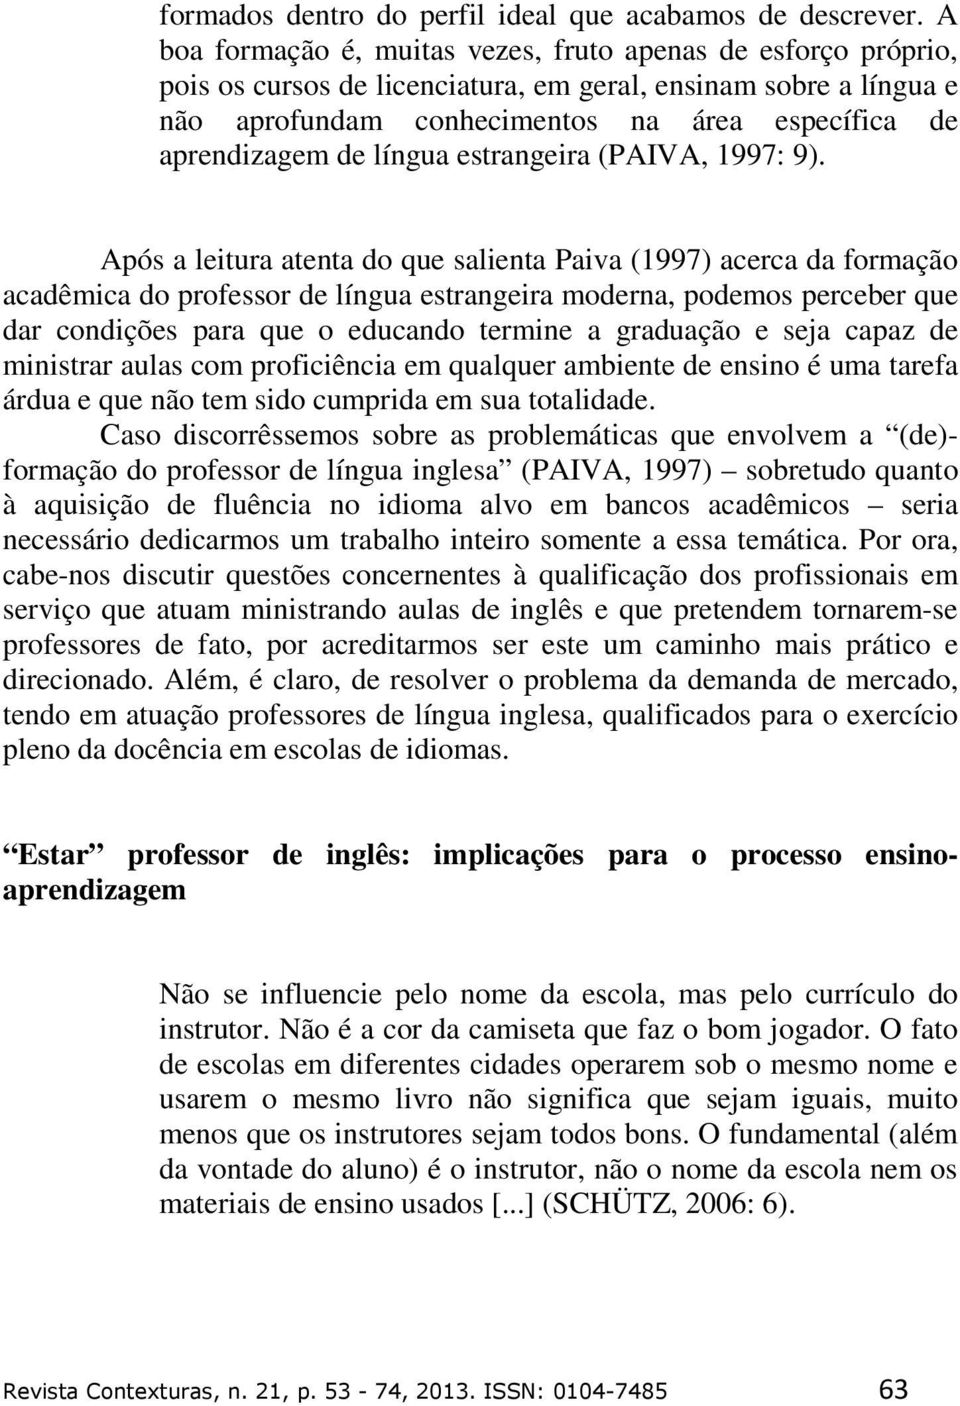 língua estrangeira (PAIVA, 1997: 9).